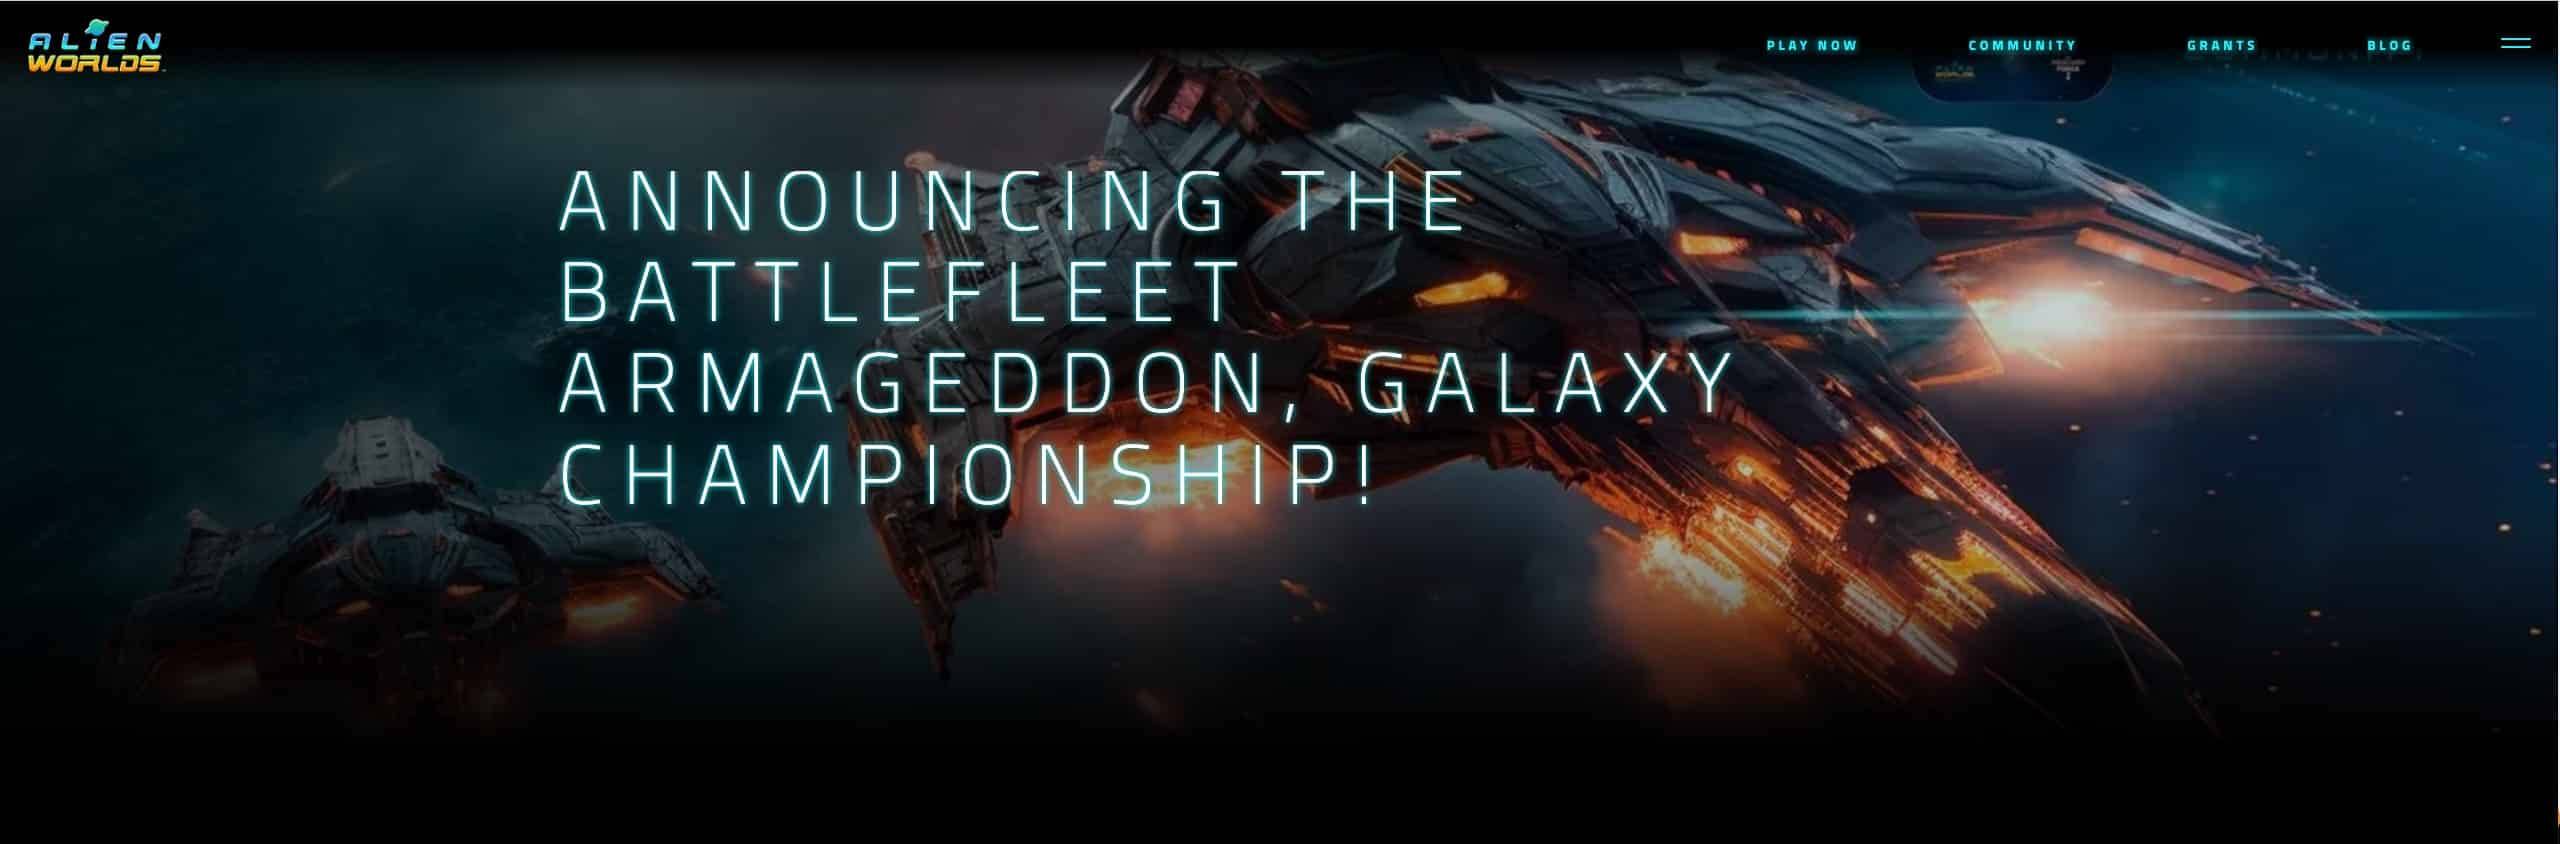 Ultimate Guide to Winning the Battlefleet Armageddon Championship